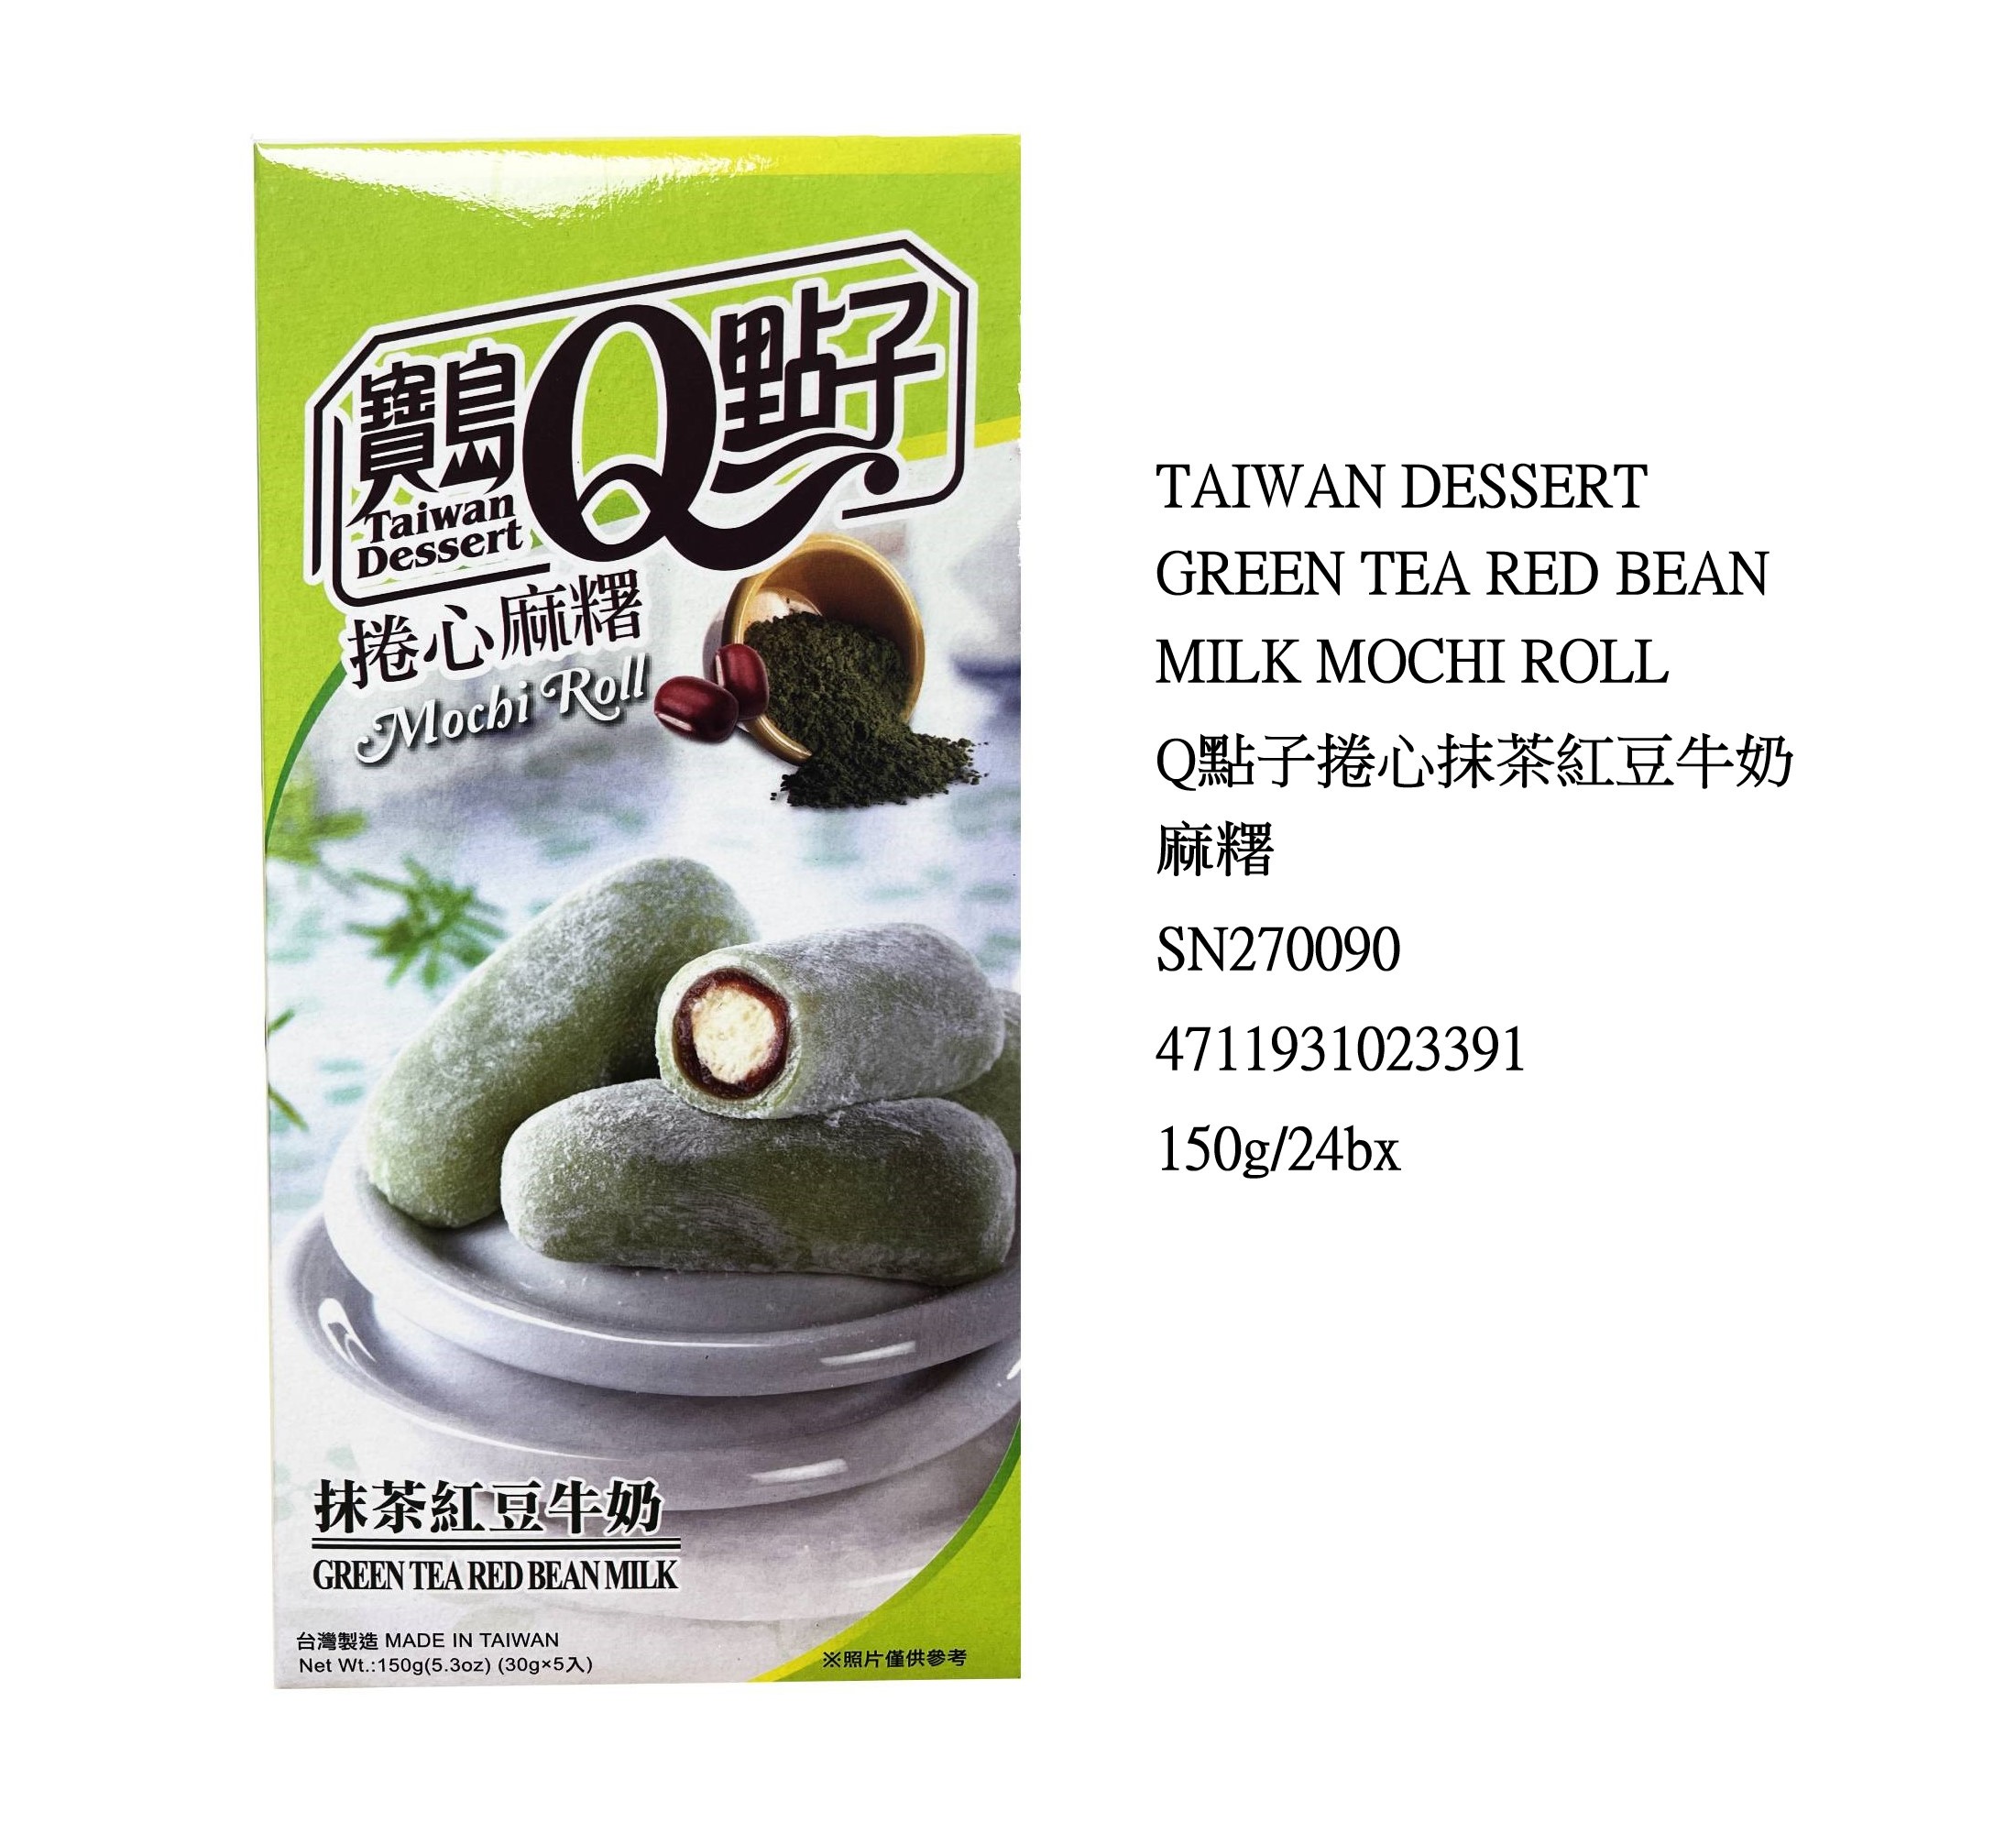 TAIWAN DESSERT GREEN TEA RED BEAN MILK MOCHI ROLL SN270090